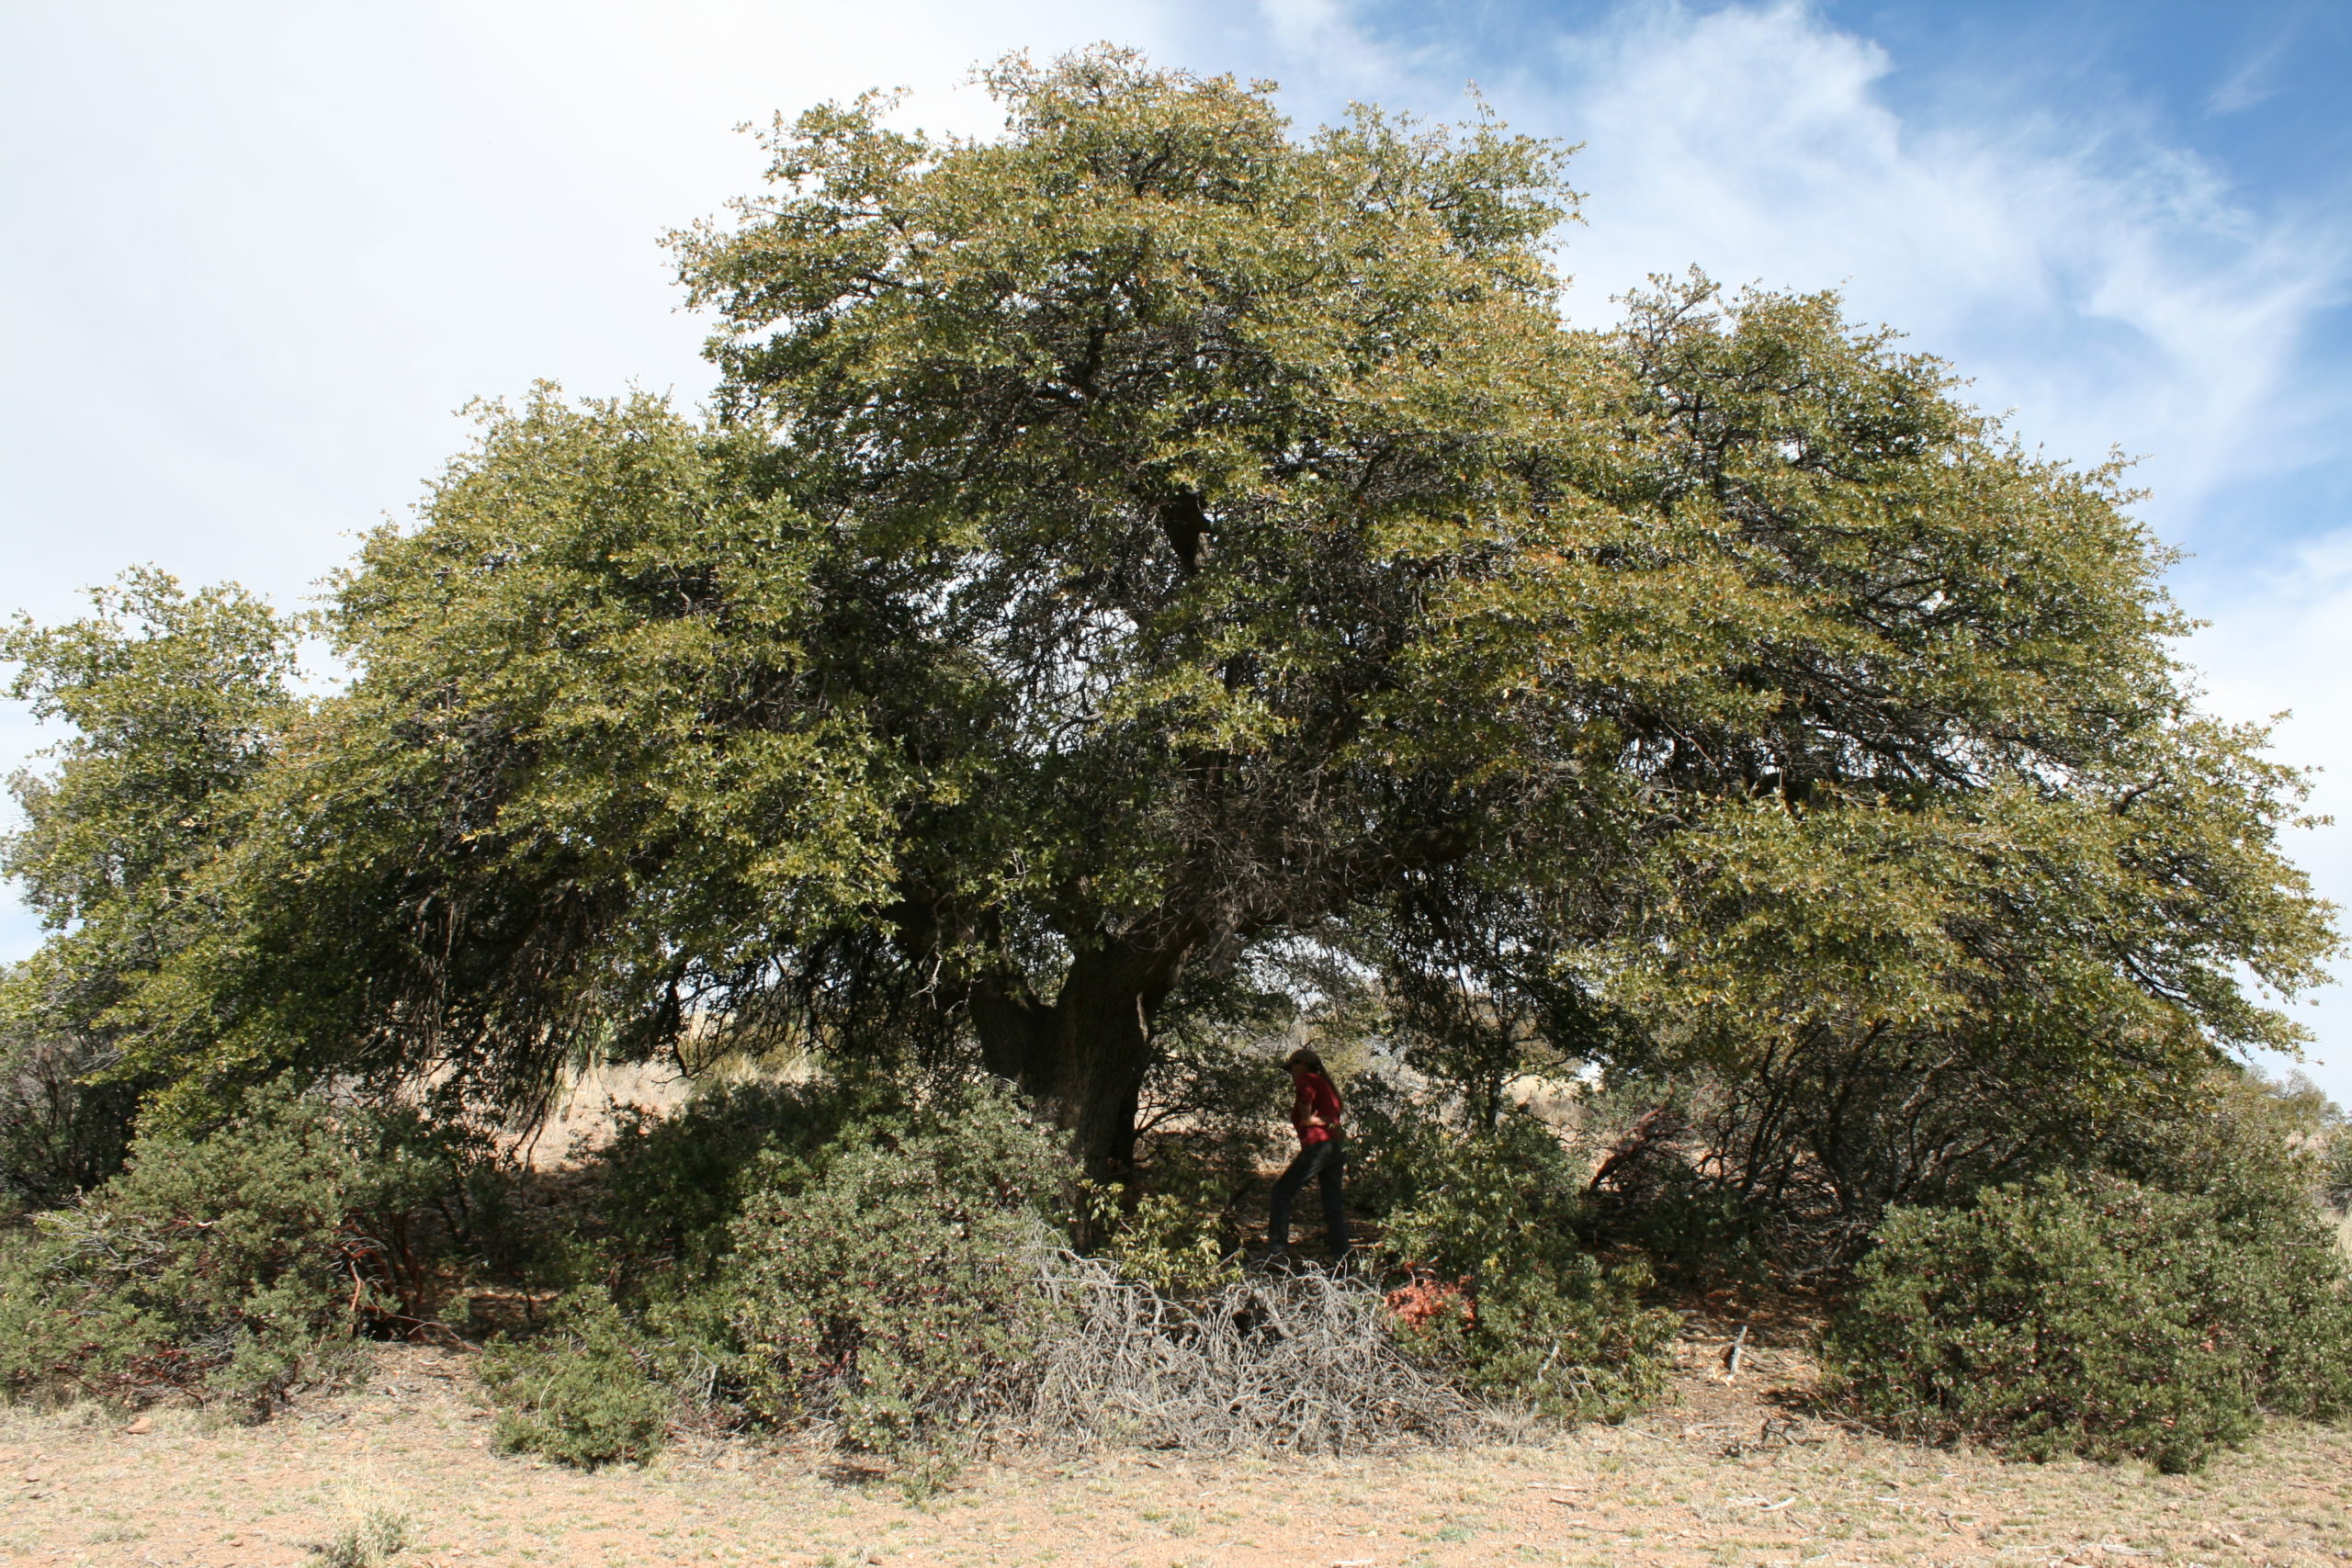 Quercus, Tree of Life